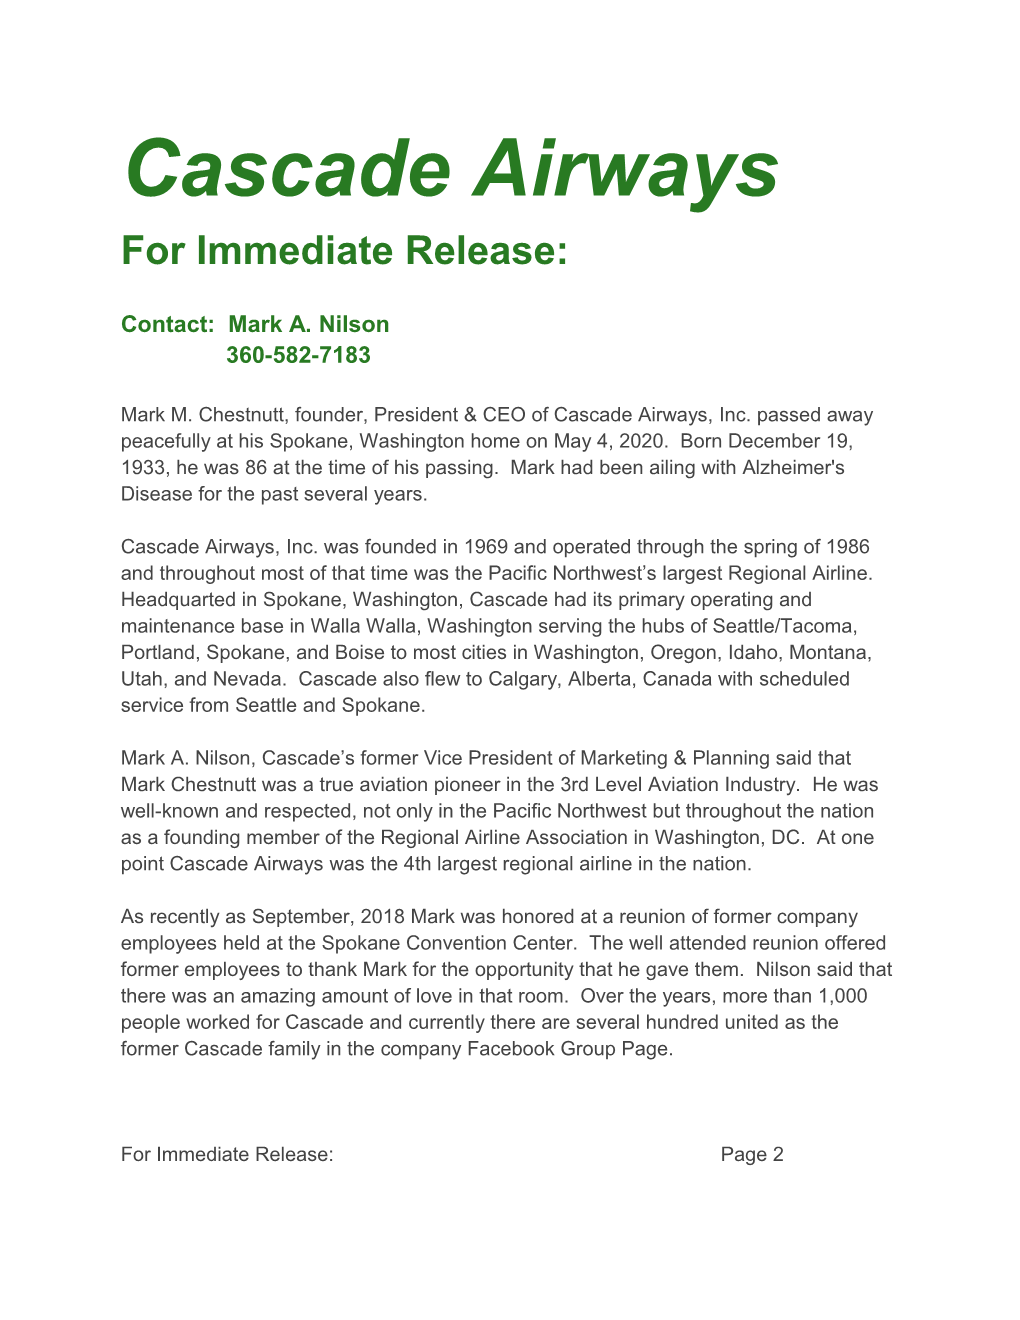 Cascade Airways for Immediate Release